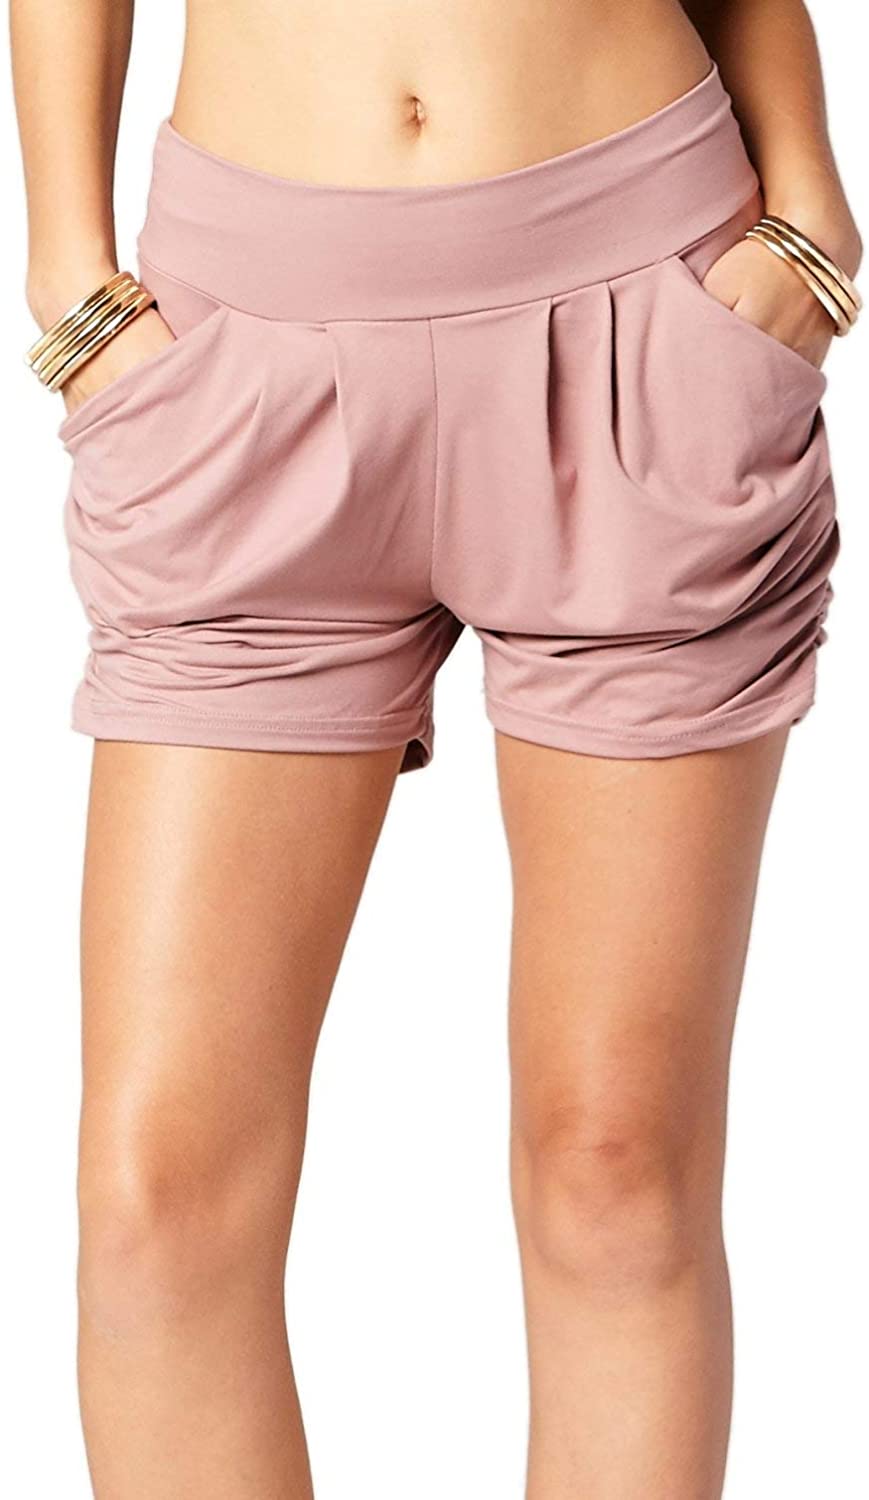 Conceited Premium Ultra Soft Harem Shorts - Pockets - 40 Trending Prints |  eBay